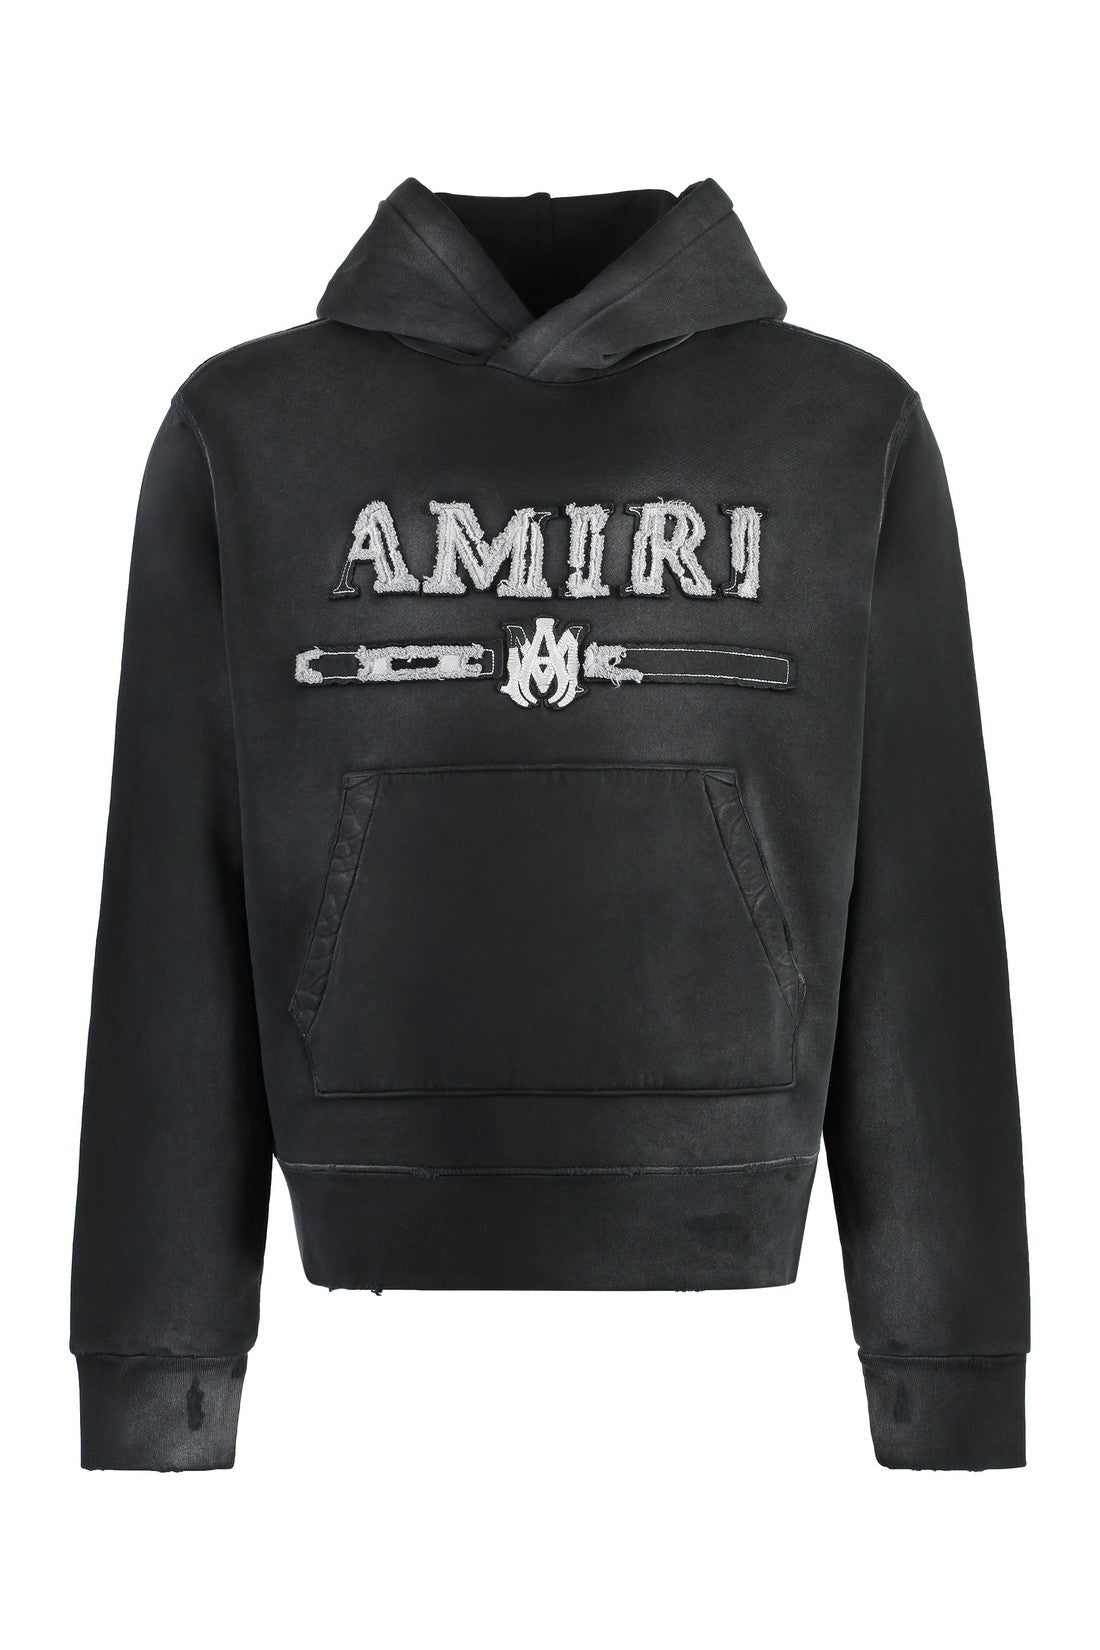 AMIRI-OUTLET-SALE-Hooded sweatshirt-ARCHIVIST